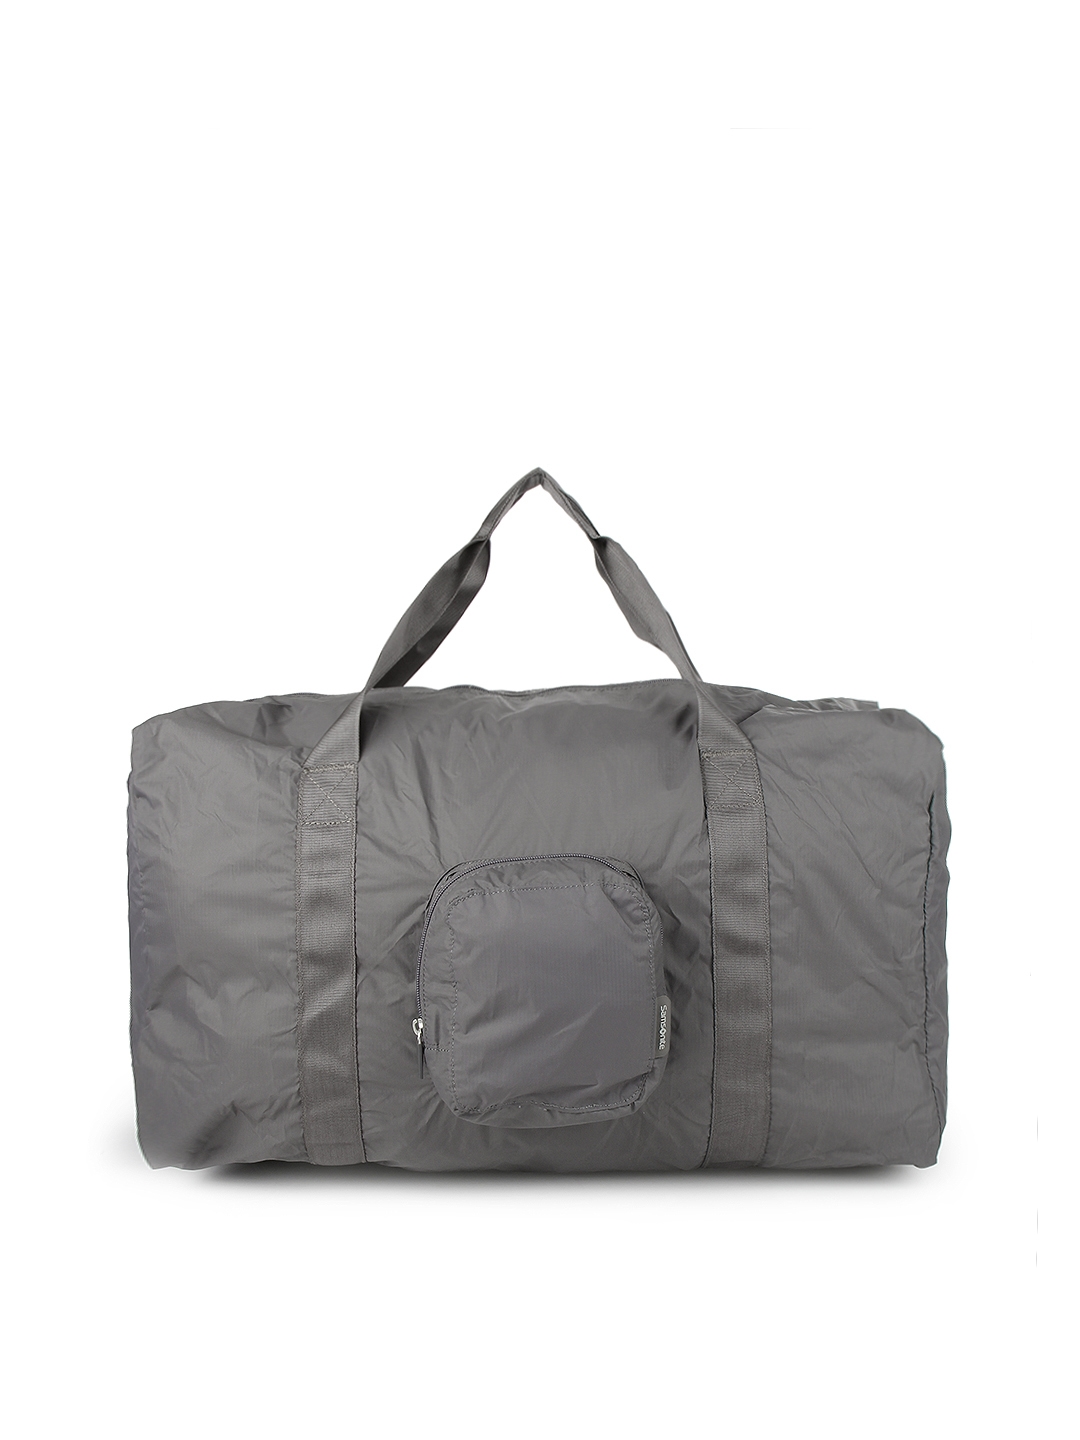 Samsonite Duffle Bags  Buy Samsonite Albi N5 Wheel Duffle 55 In Color  Black Online  Nykaa Fashion